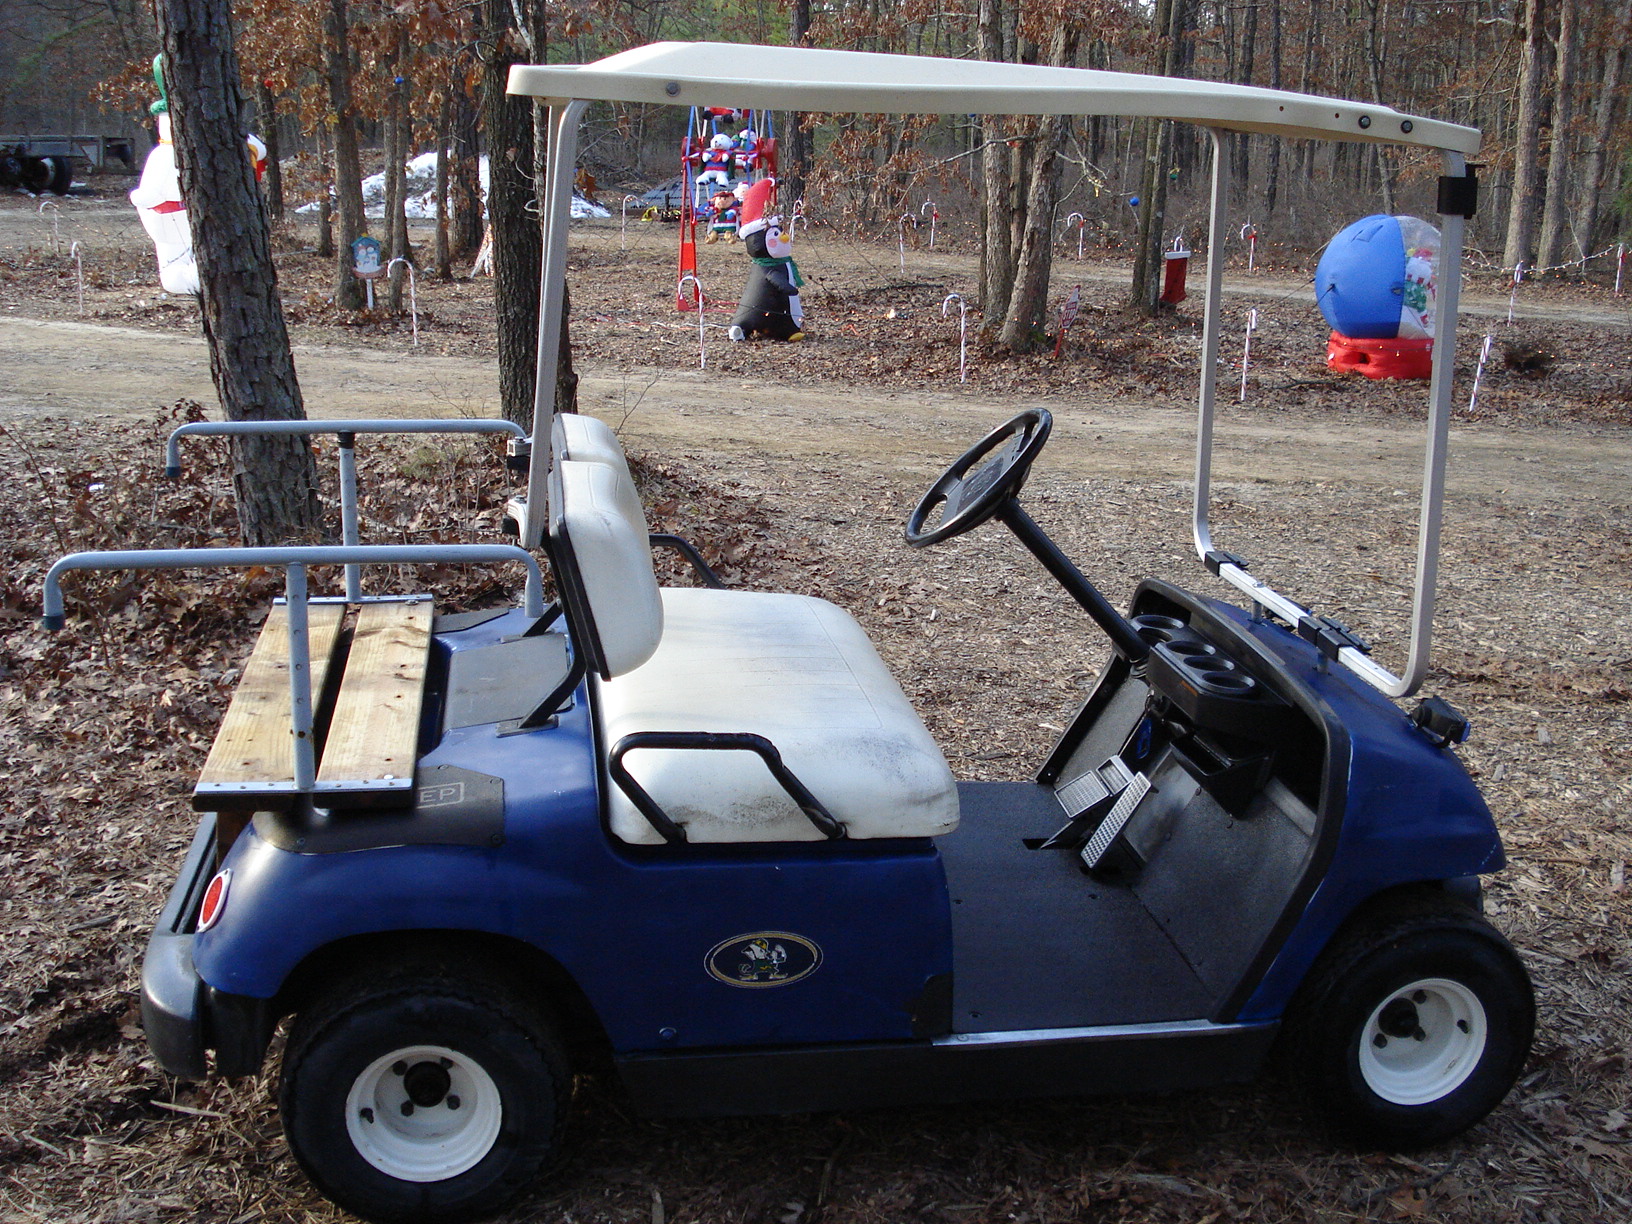 Yamaha Golf Cart for Sale